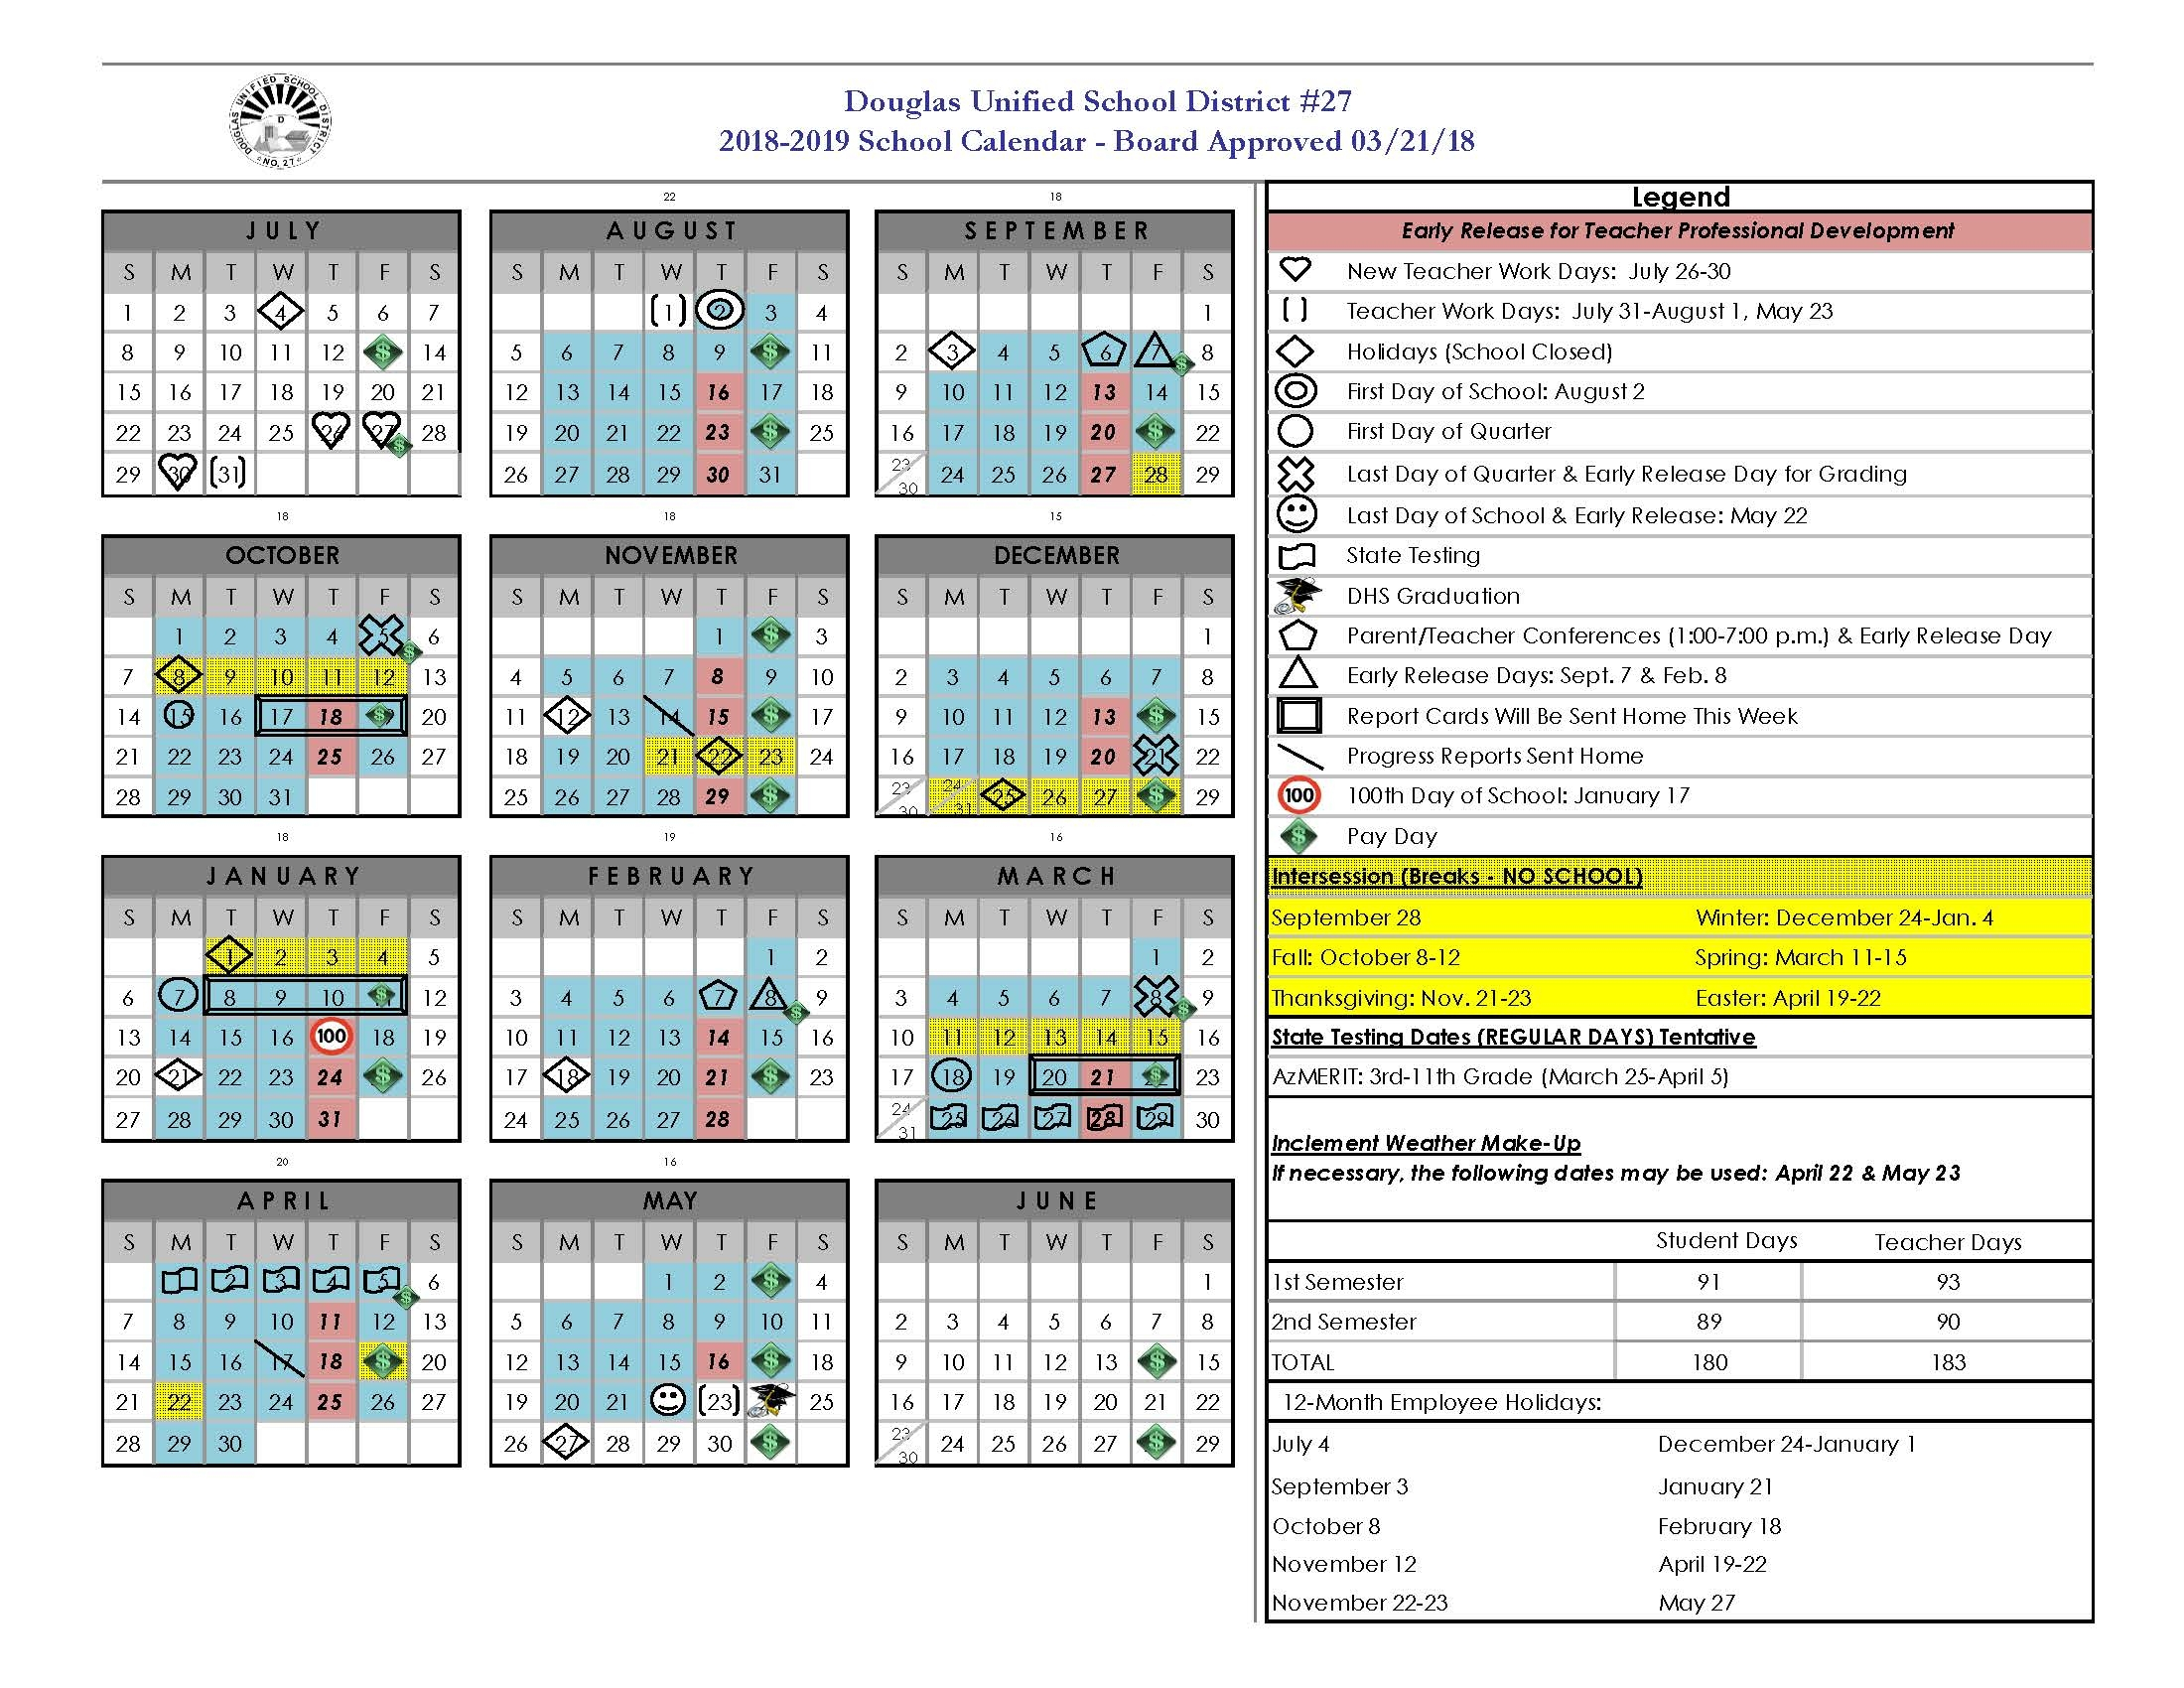 douglas-county-nevada-school-district-calendar-2023-schoolcalendars